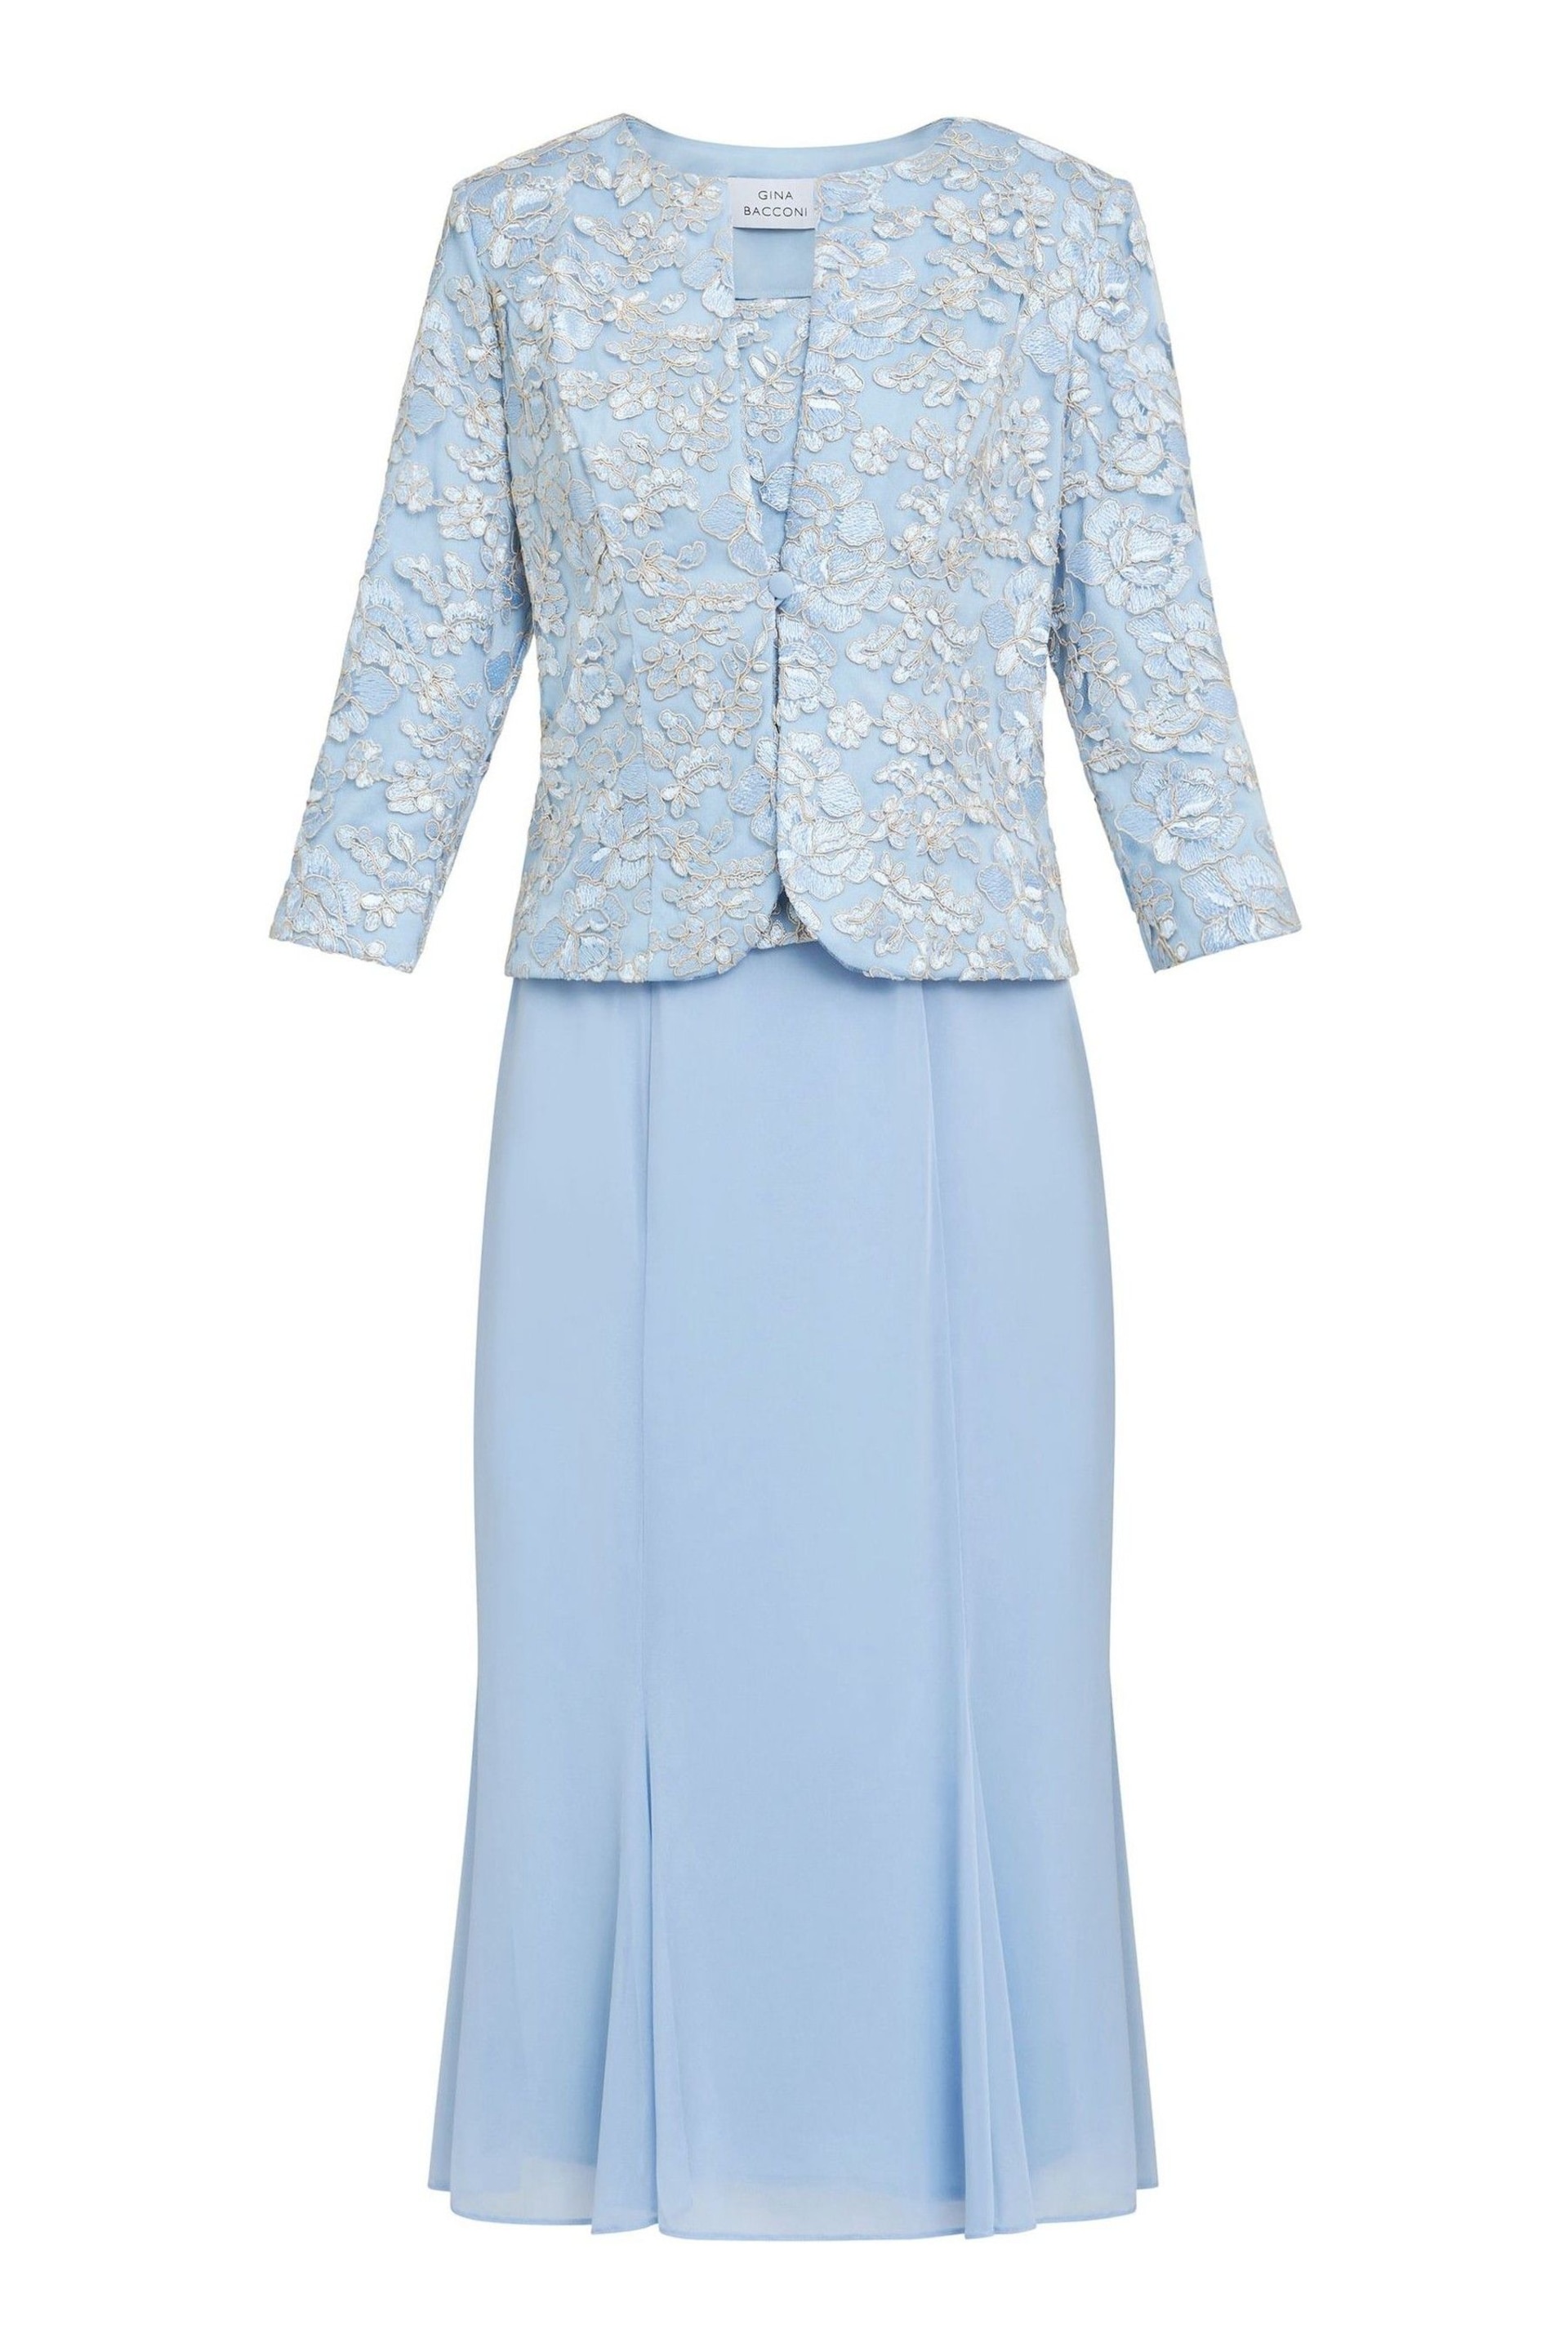 Gina Bacconi Blue Joyce Midi Dress With Embroidered Lace - Image 6 of 6